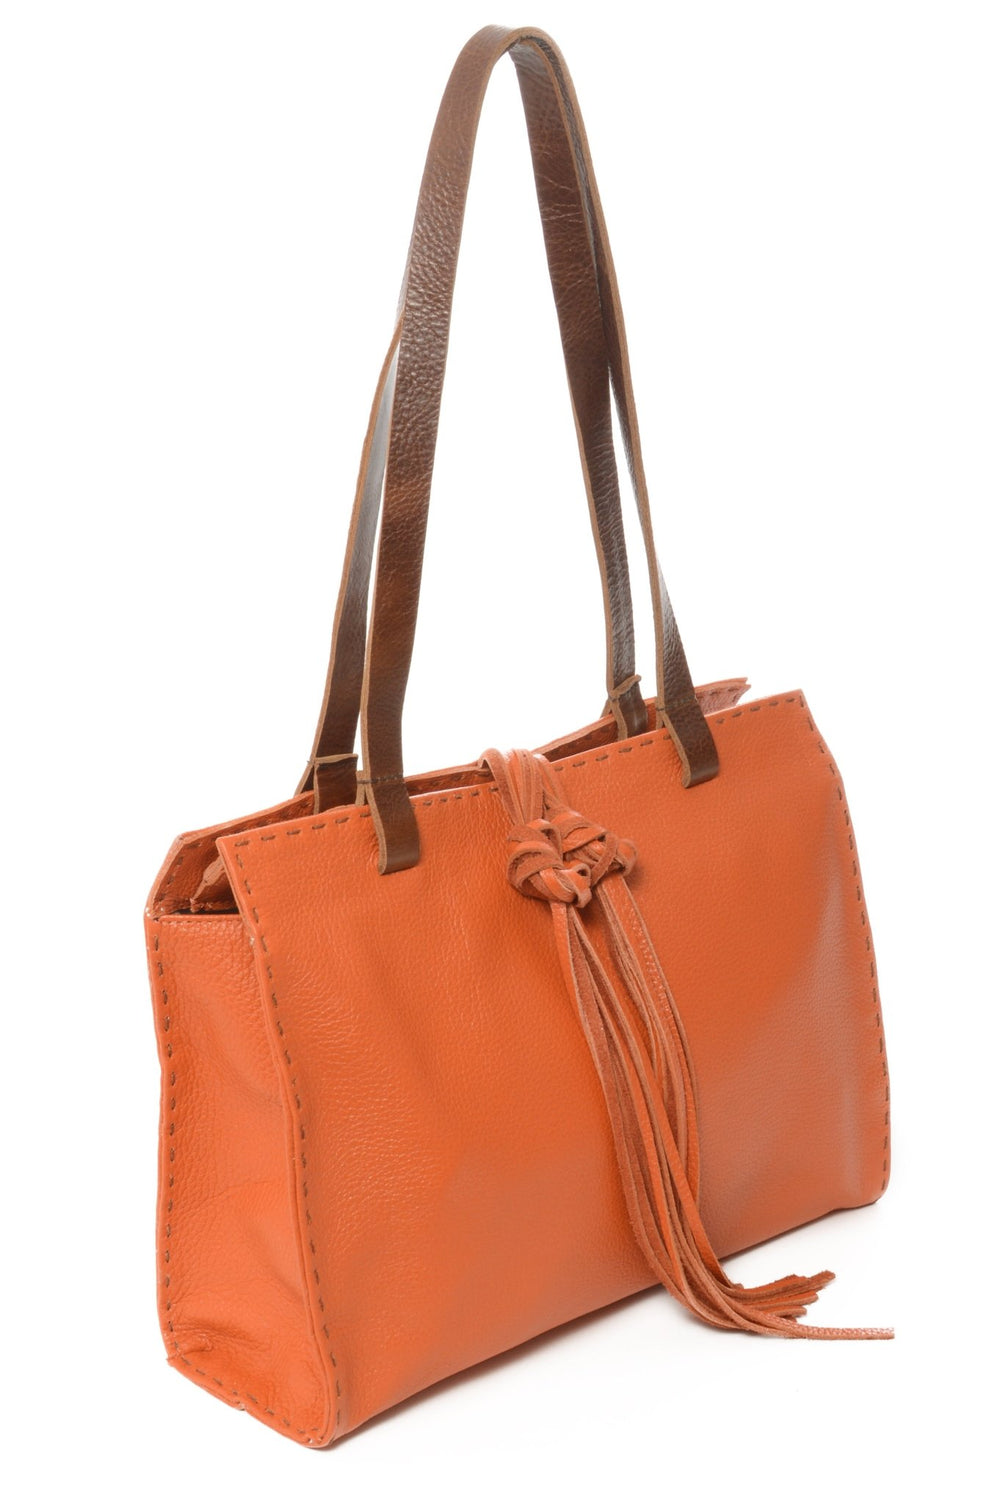 MONTEREY Orange - Carla Mancini Handbags